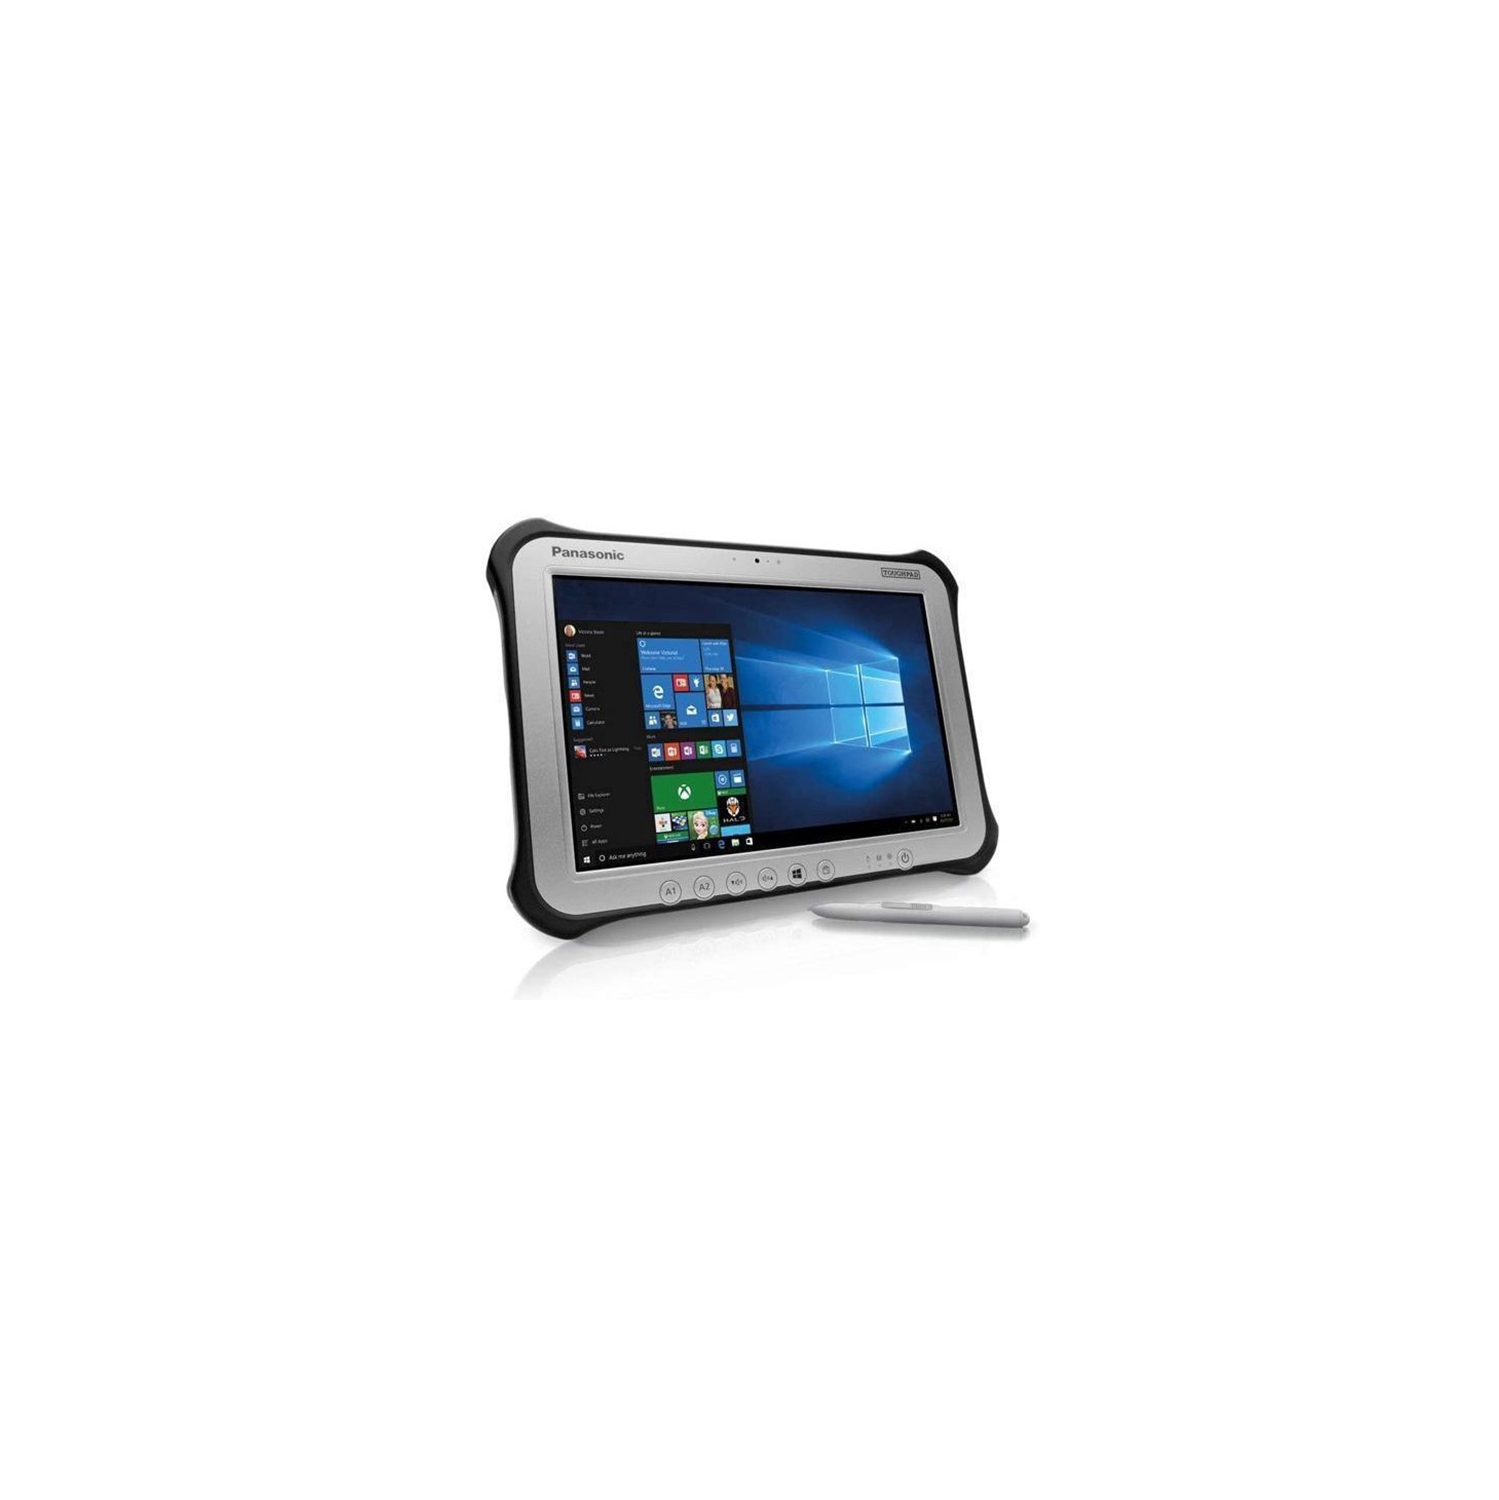 Refurbished (Good) - Panasonic Toughbook G1, FZ-G1 MK1, Rugged Tablet, 10.1" WUXGA Multi-Touch + Digitizer, Intel Core i5-3437U 1.90GHz, 4GB, 128GB SSD, Wi-Fi, Bluetooth, Win10 Pro